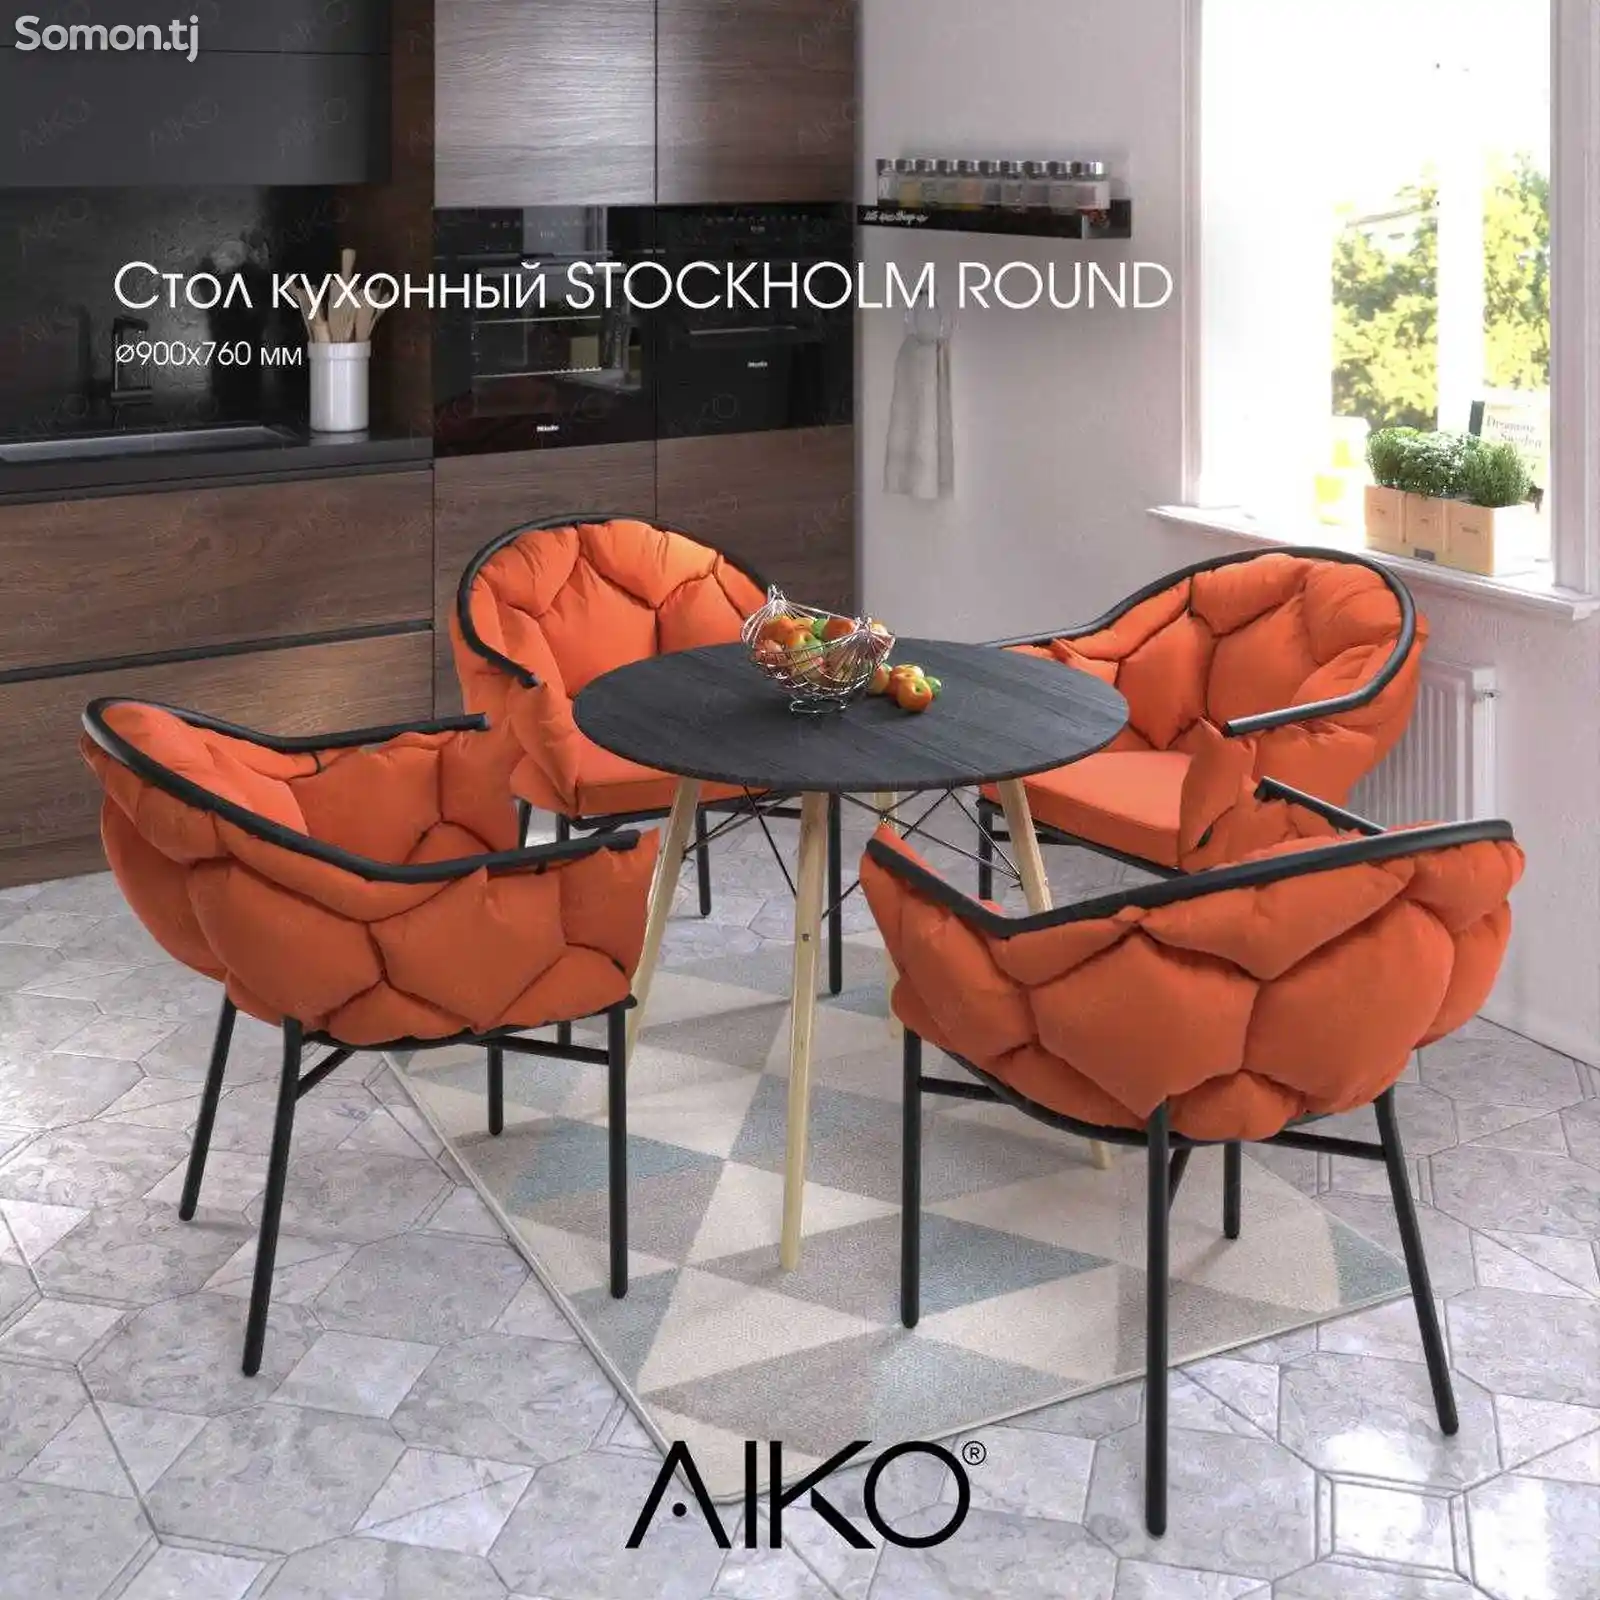 Кухонный стол AIKO Stockholm Round-2